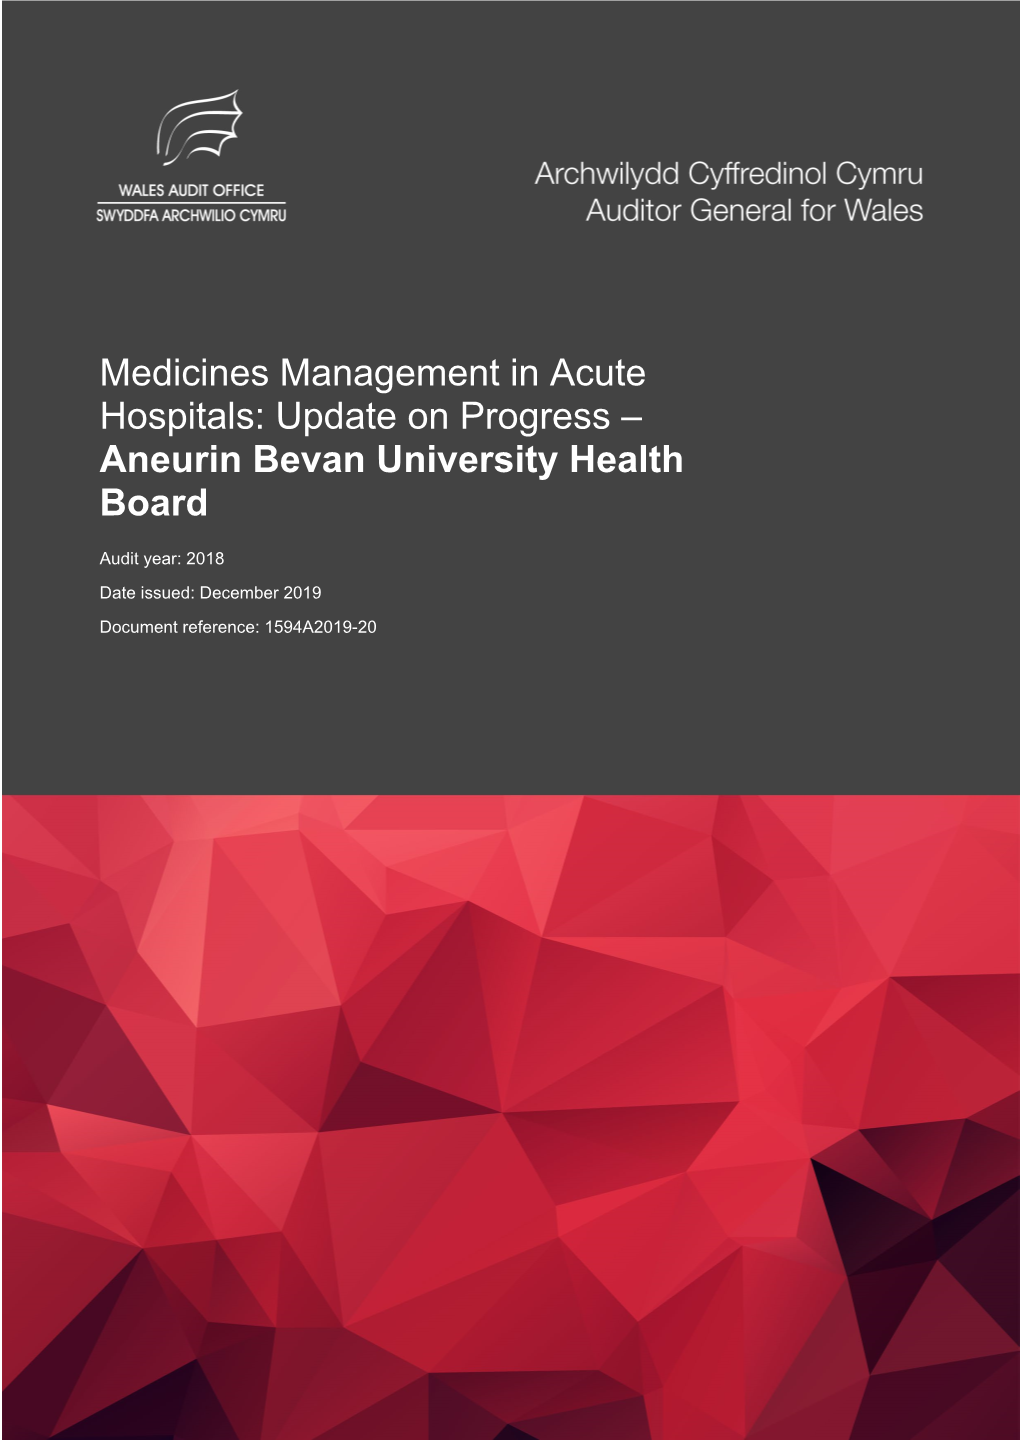 Medicines Management in Acute Hospitals: Update on Progress – Aneurin Bevan University Health Board